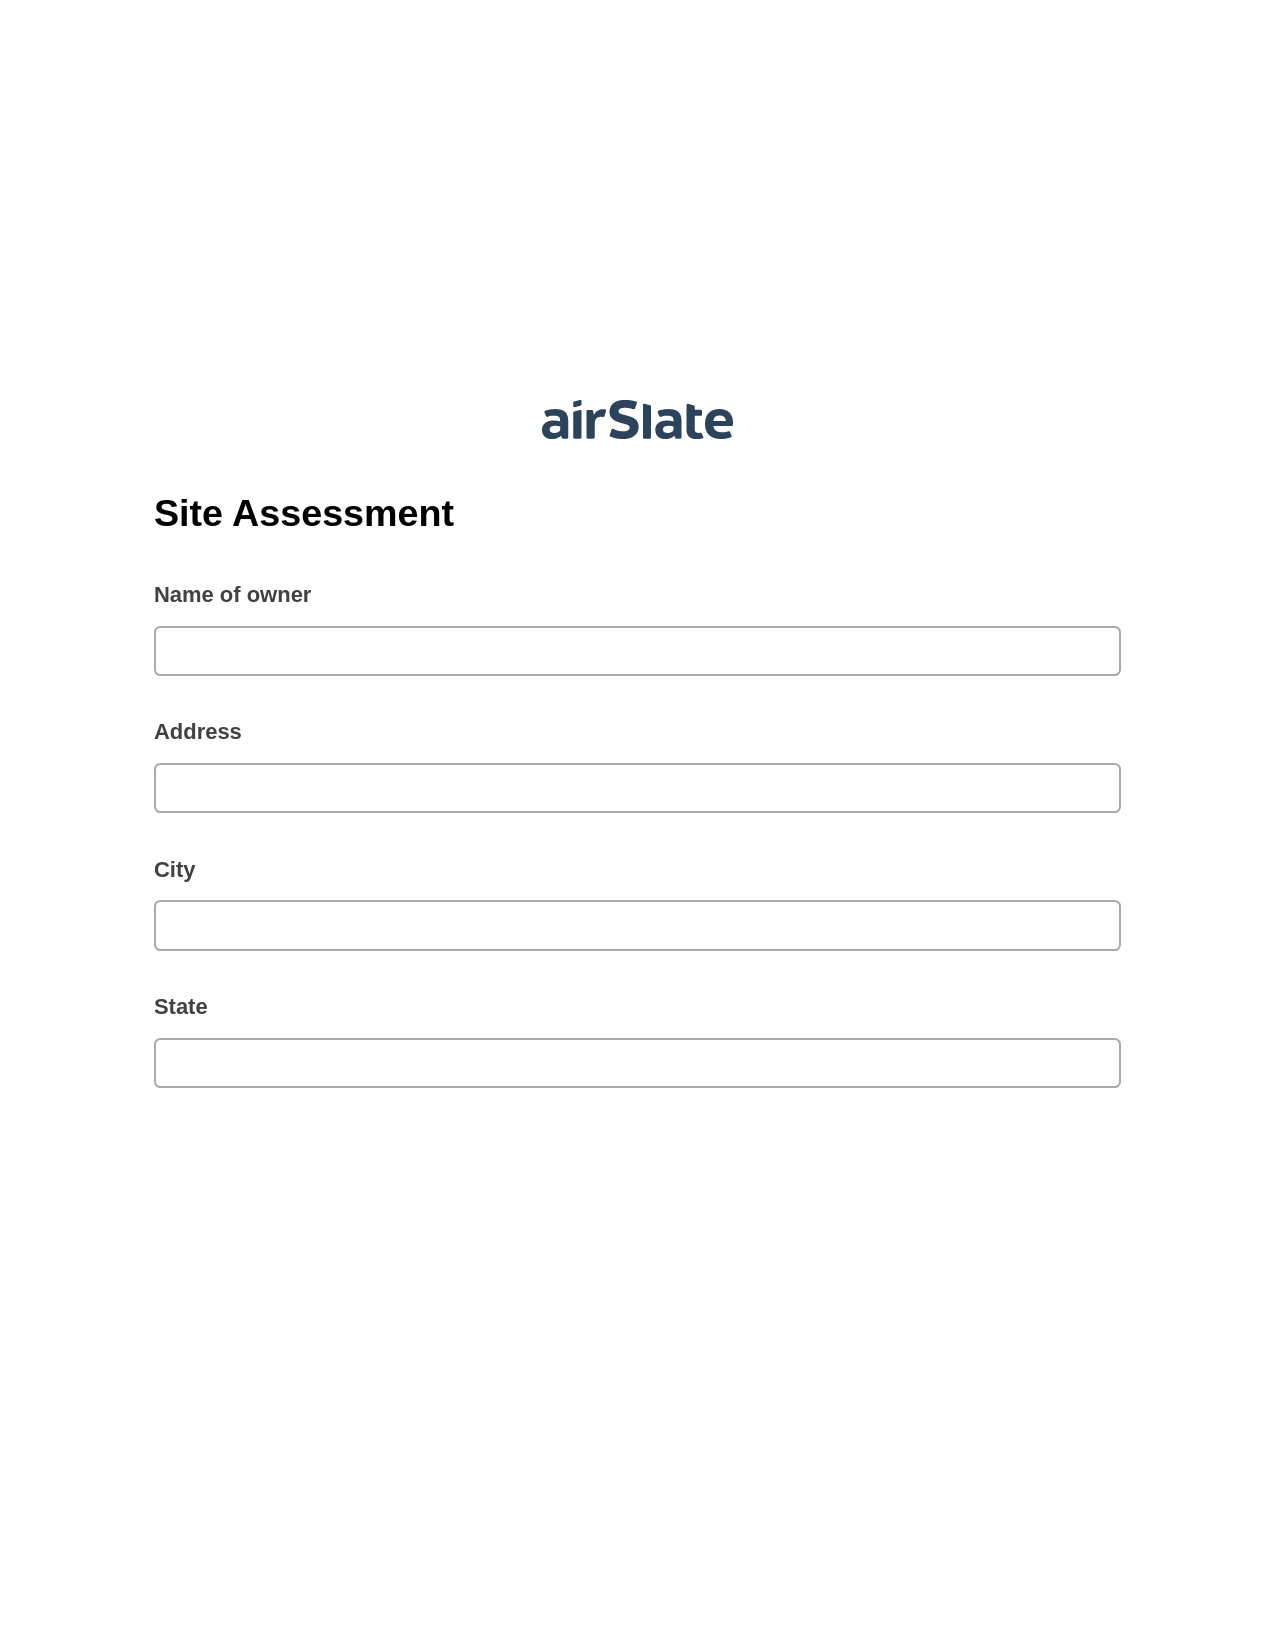 Site Assessment Pre-fill Document Bot, Slack Notification Bot, Slack Two-Way Binding Bot